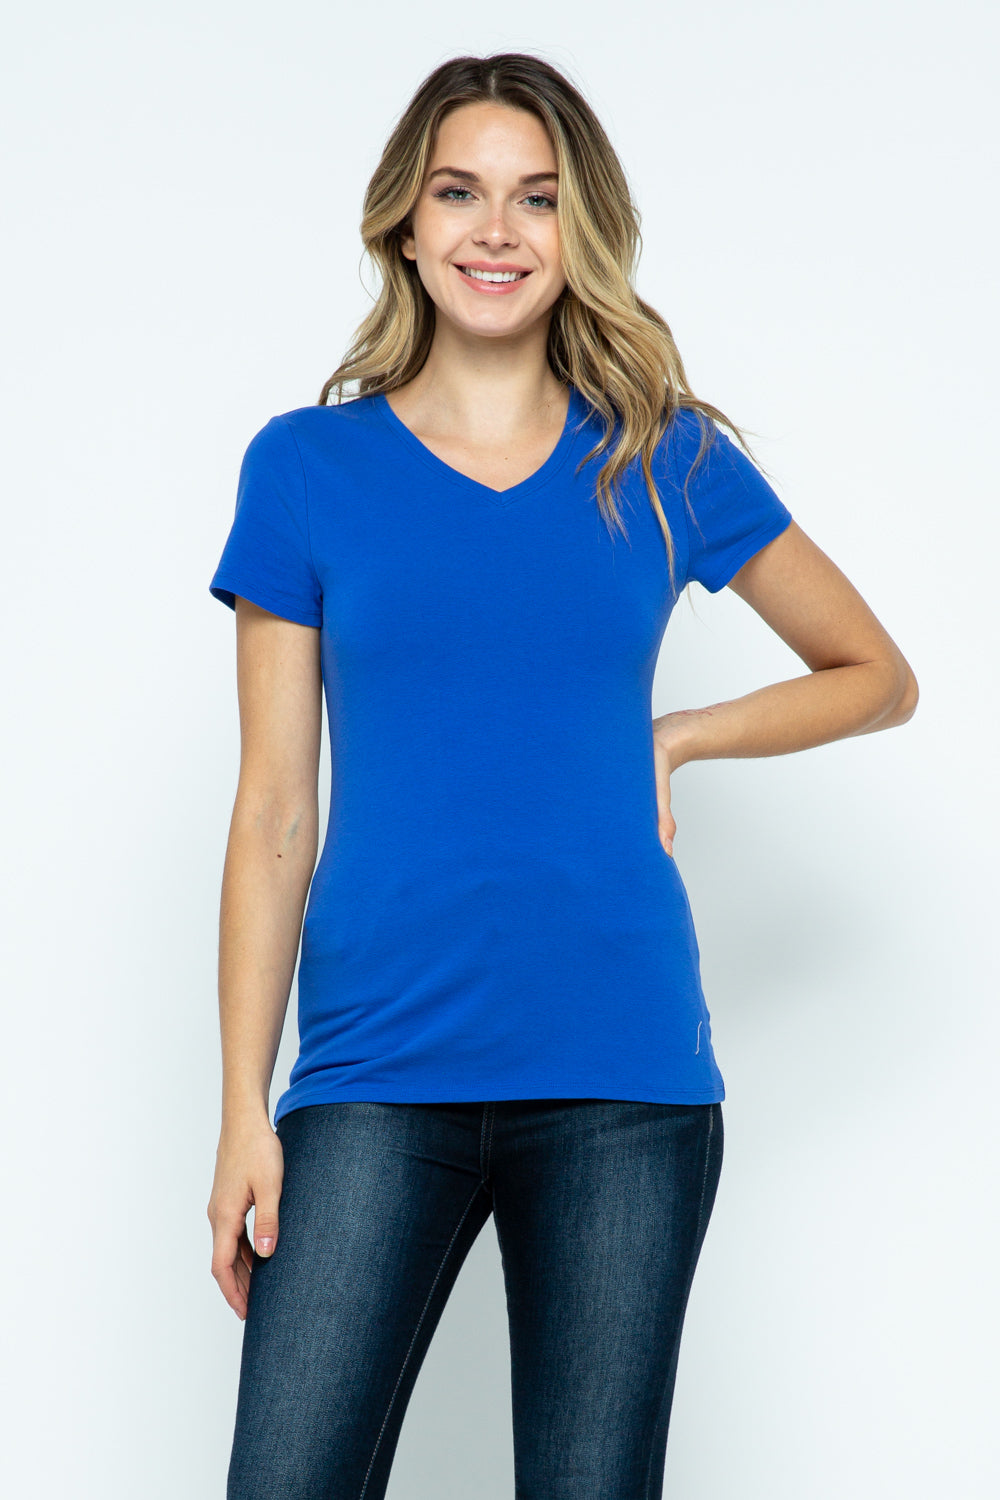 Cielo Women's Basic V-Neck Short-Sleeve T-Shirts - T1004